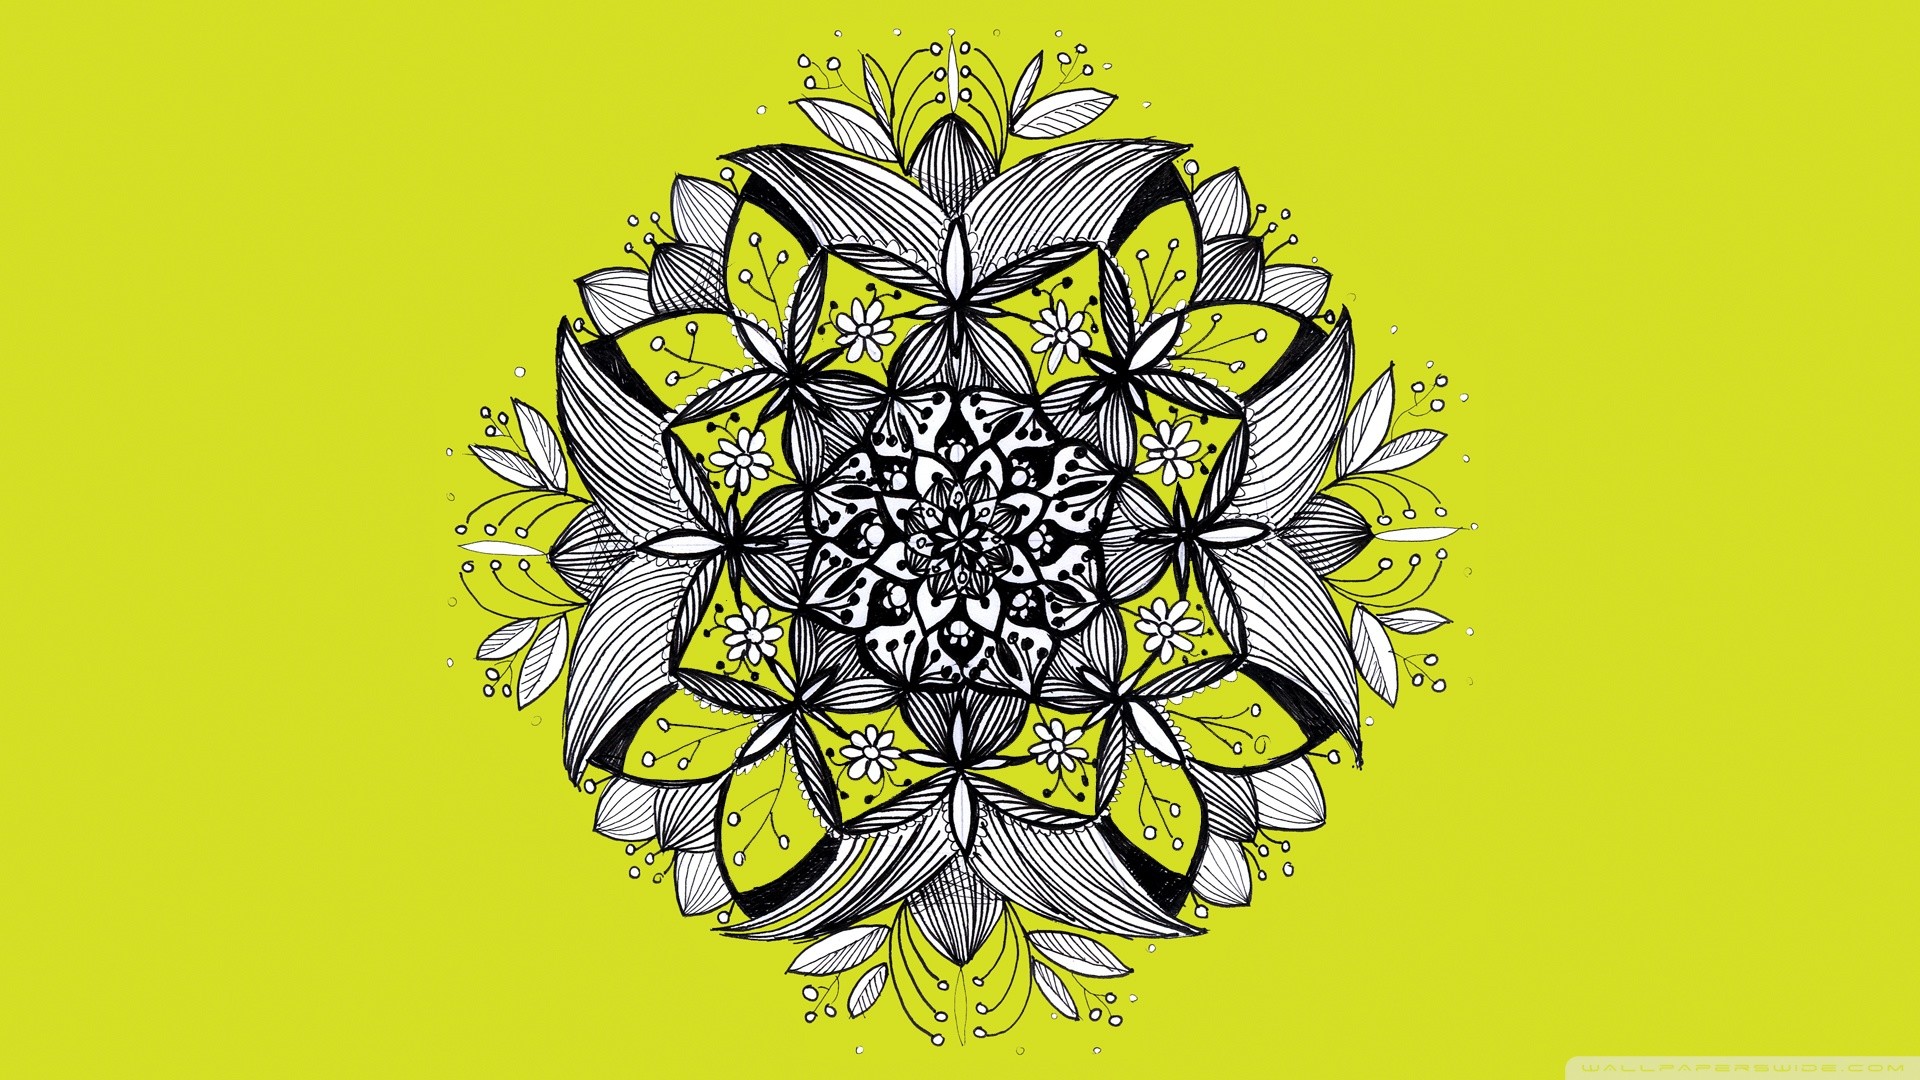 mandala wallpaper hd,giallo,modello,simmetria,pianta,disegno grafico